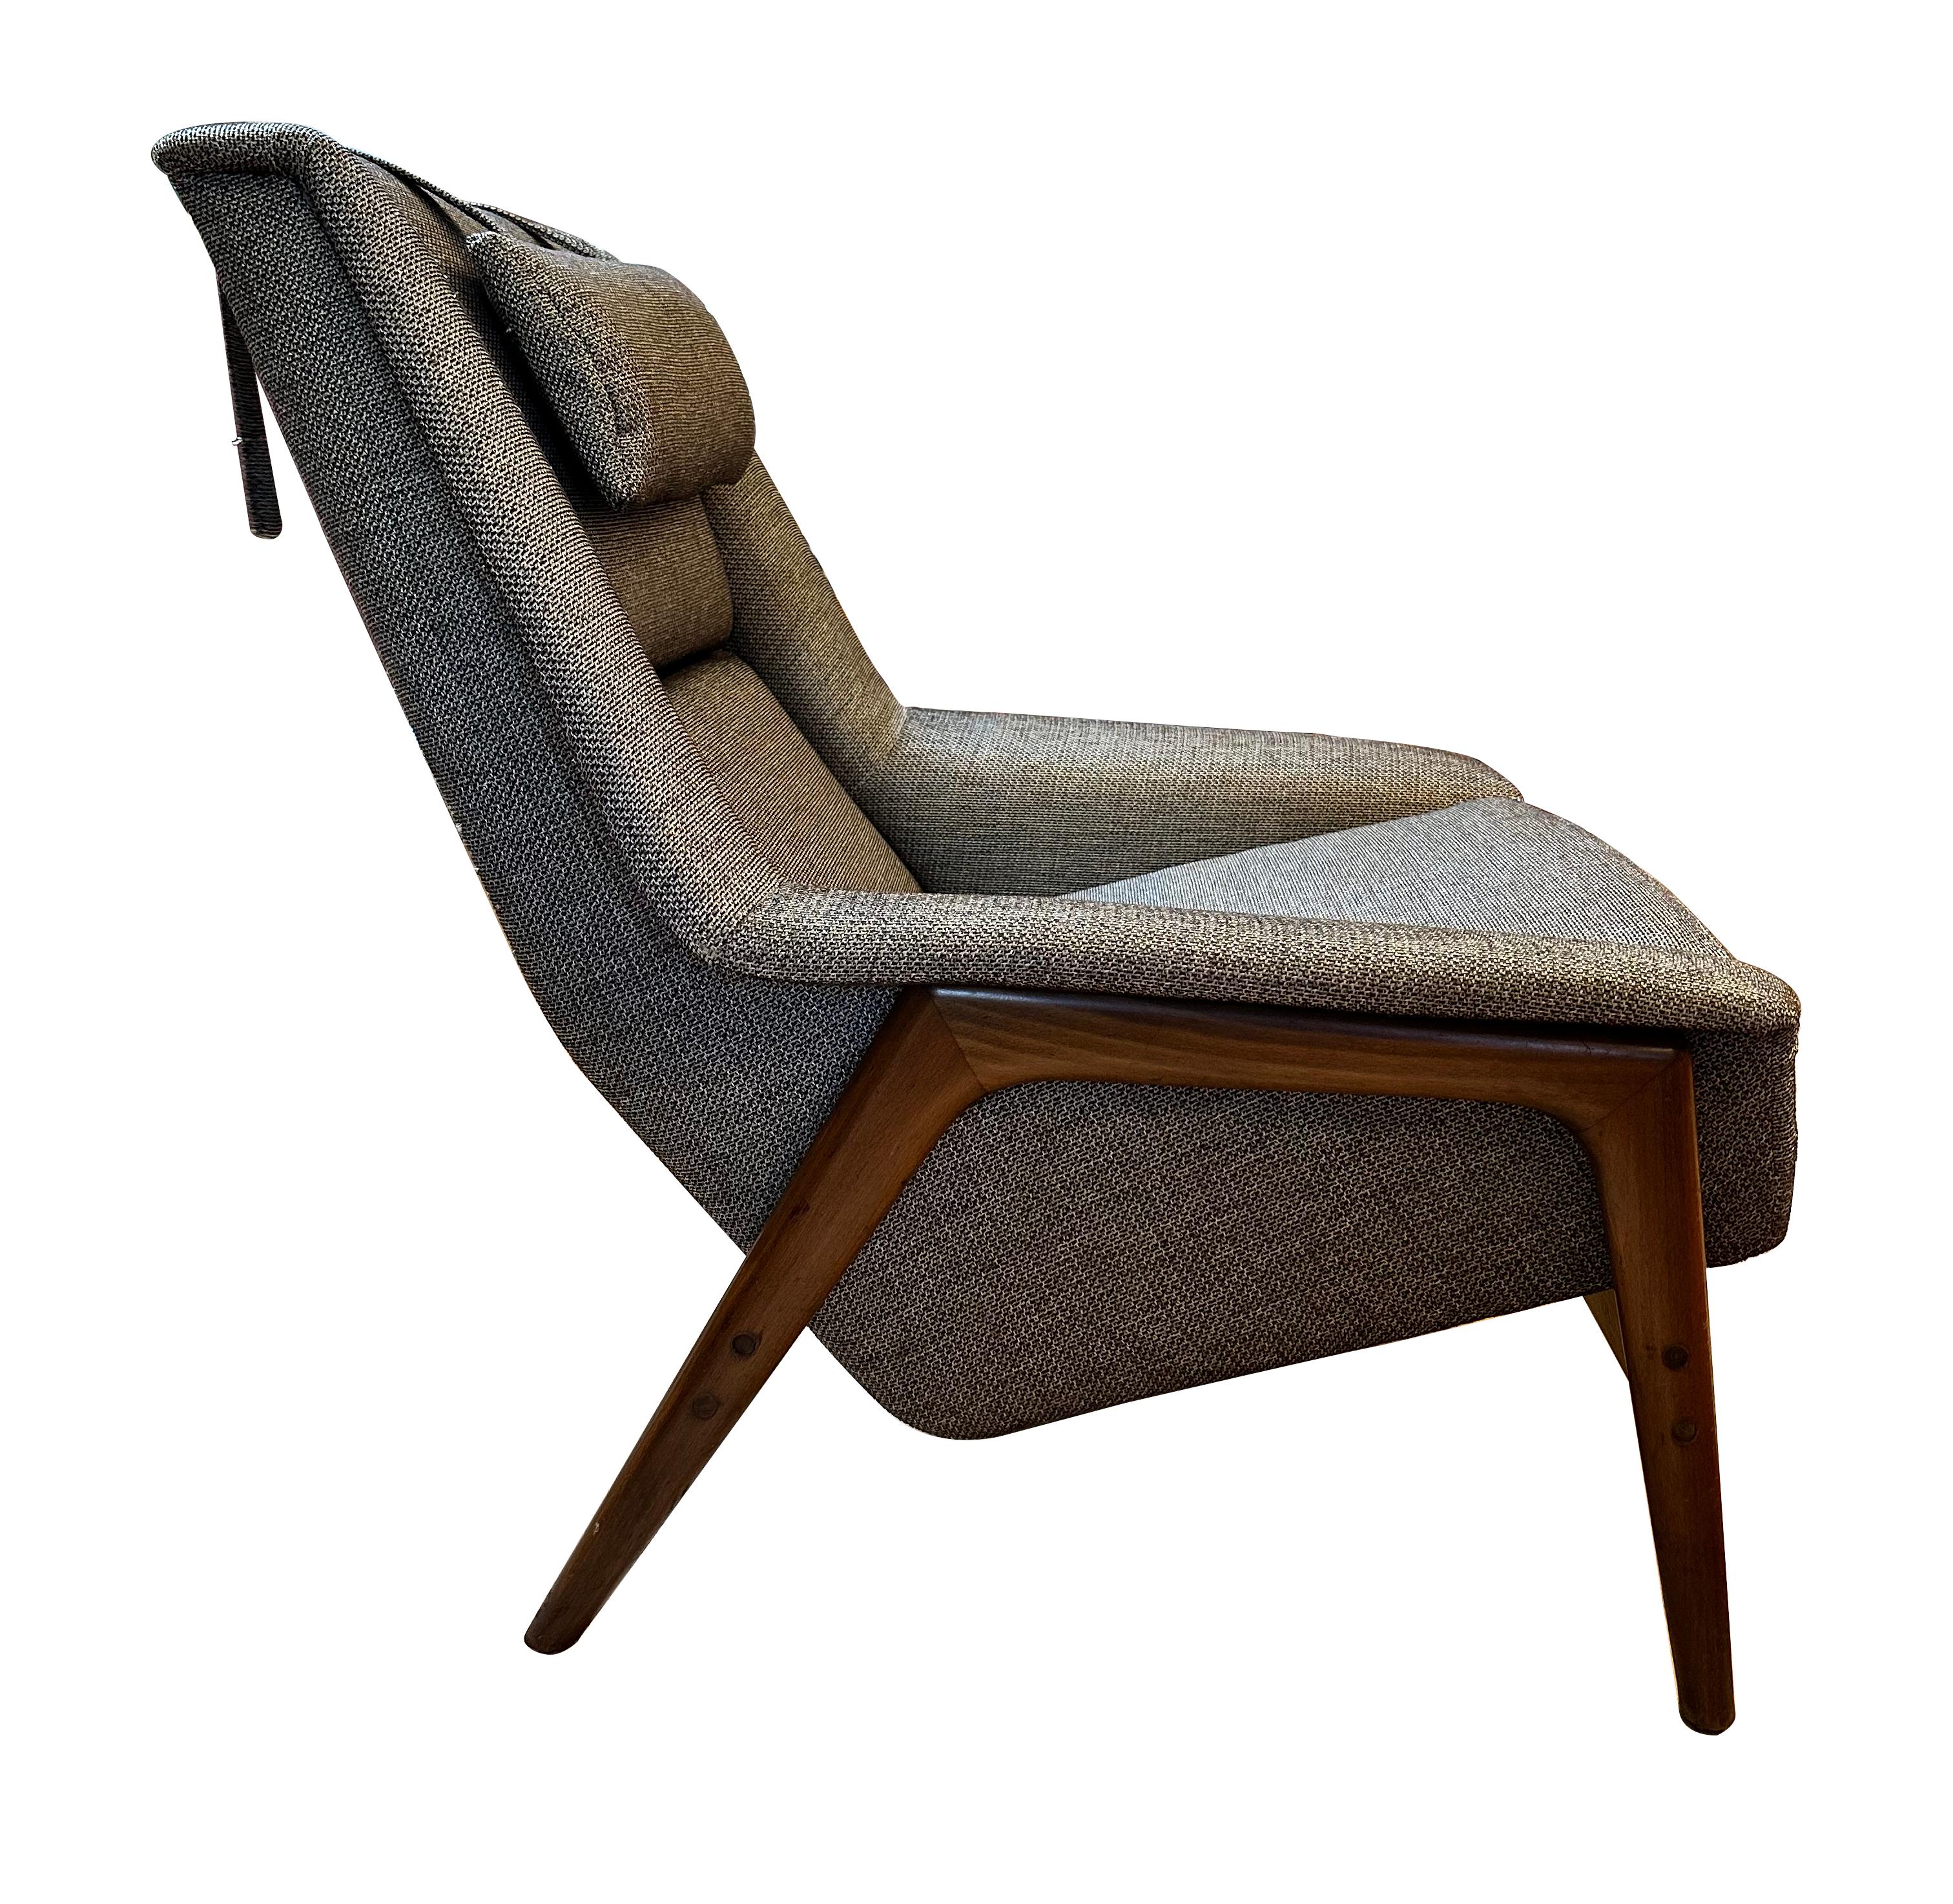 20th Century Scandinavian Modern Profil Lounge Chair by Folke Ohlsson for Dux Sweden